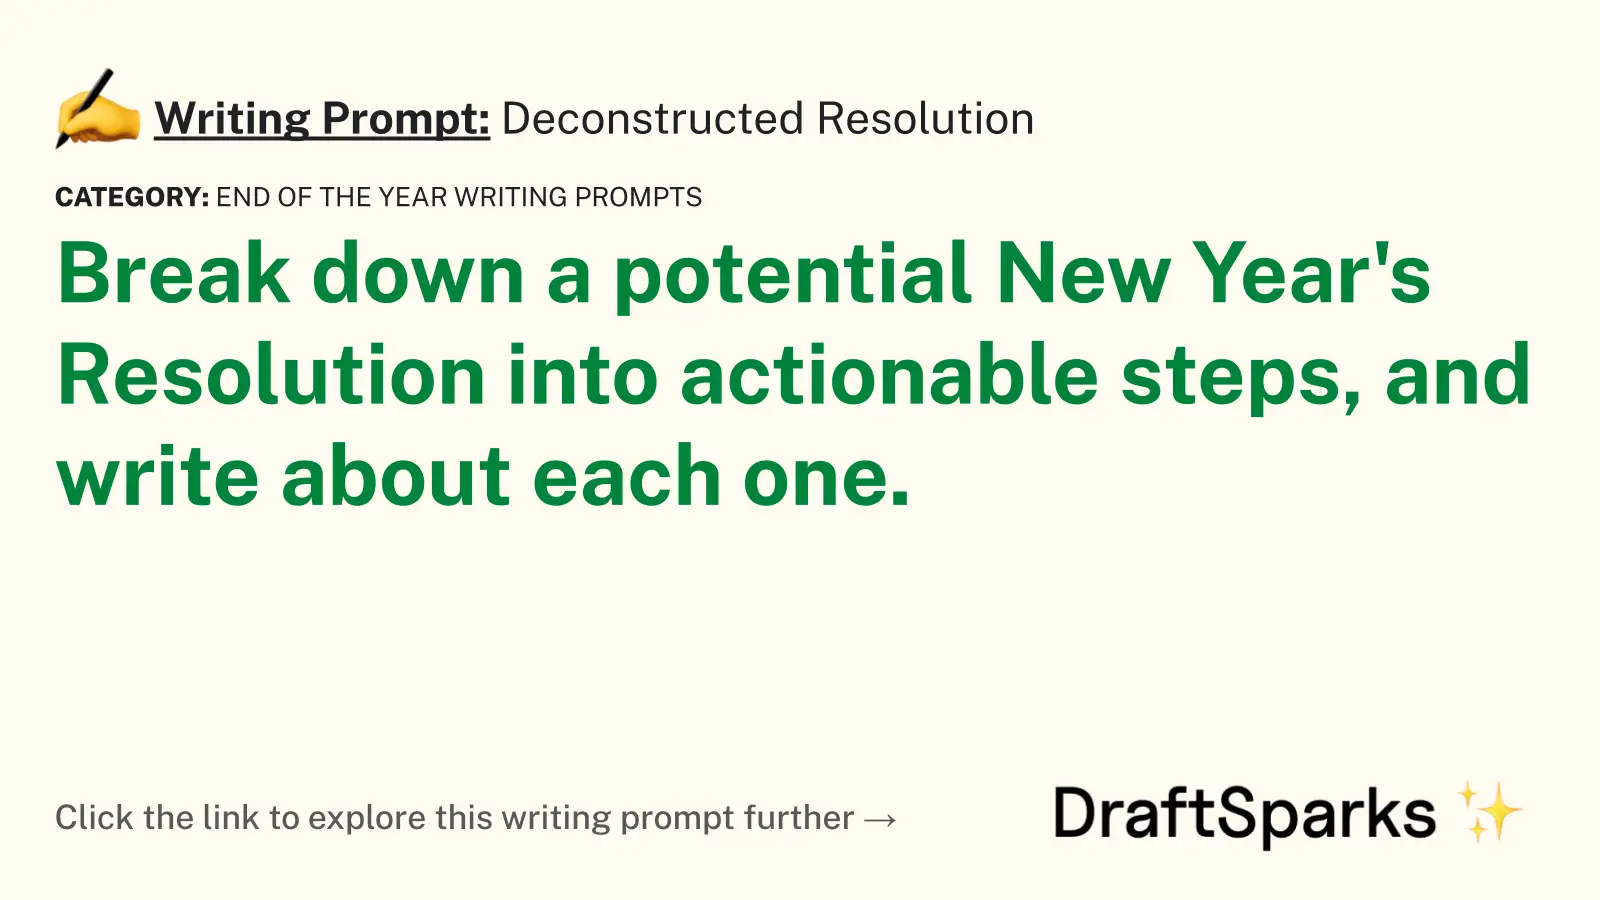 Deconstructed Resolution